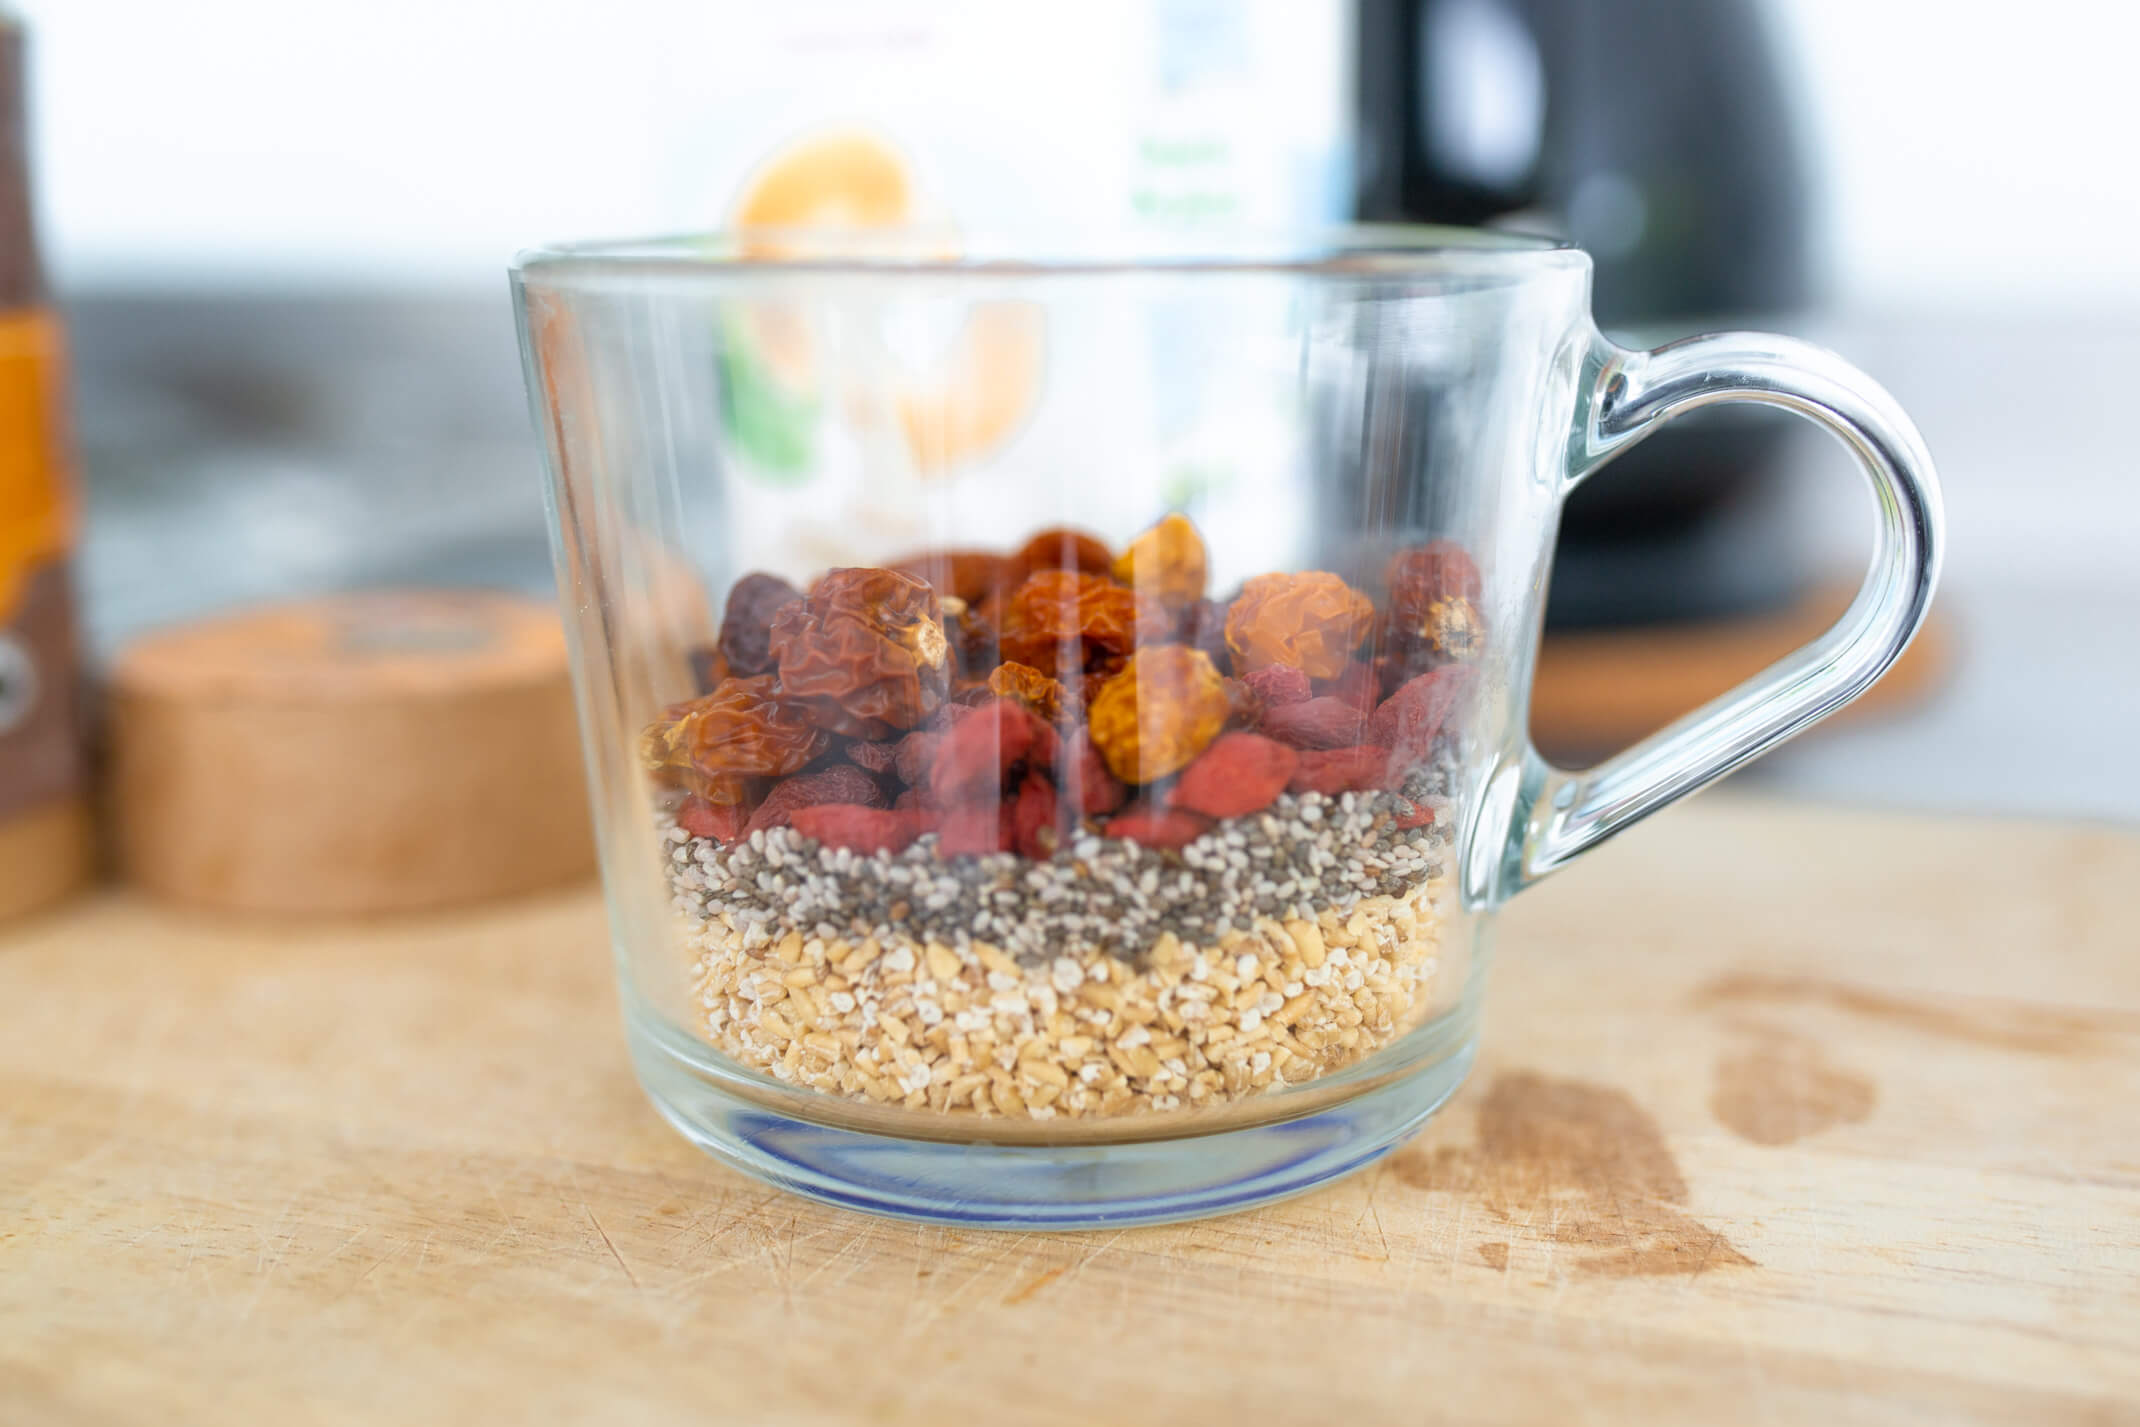 RECIPE: A warming turmeric, chia and berry oats bowl